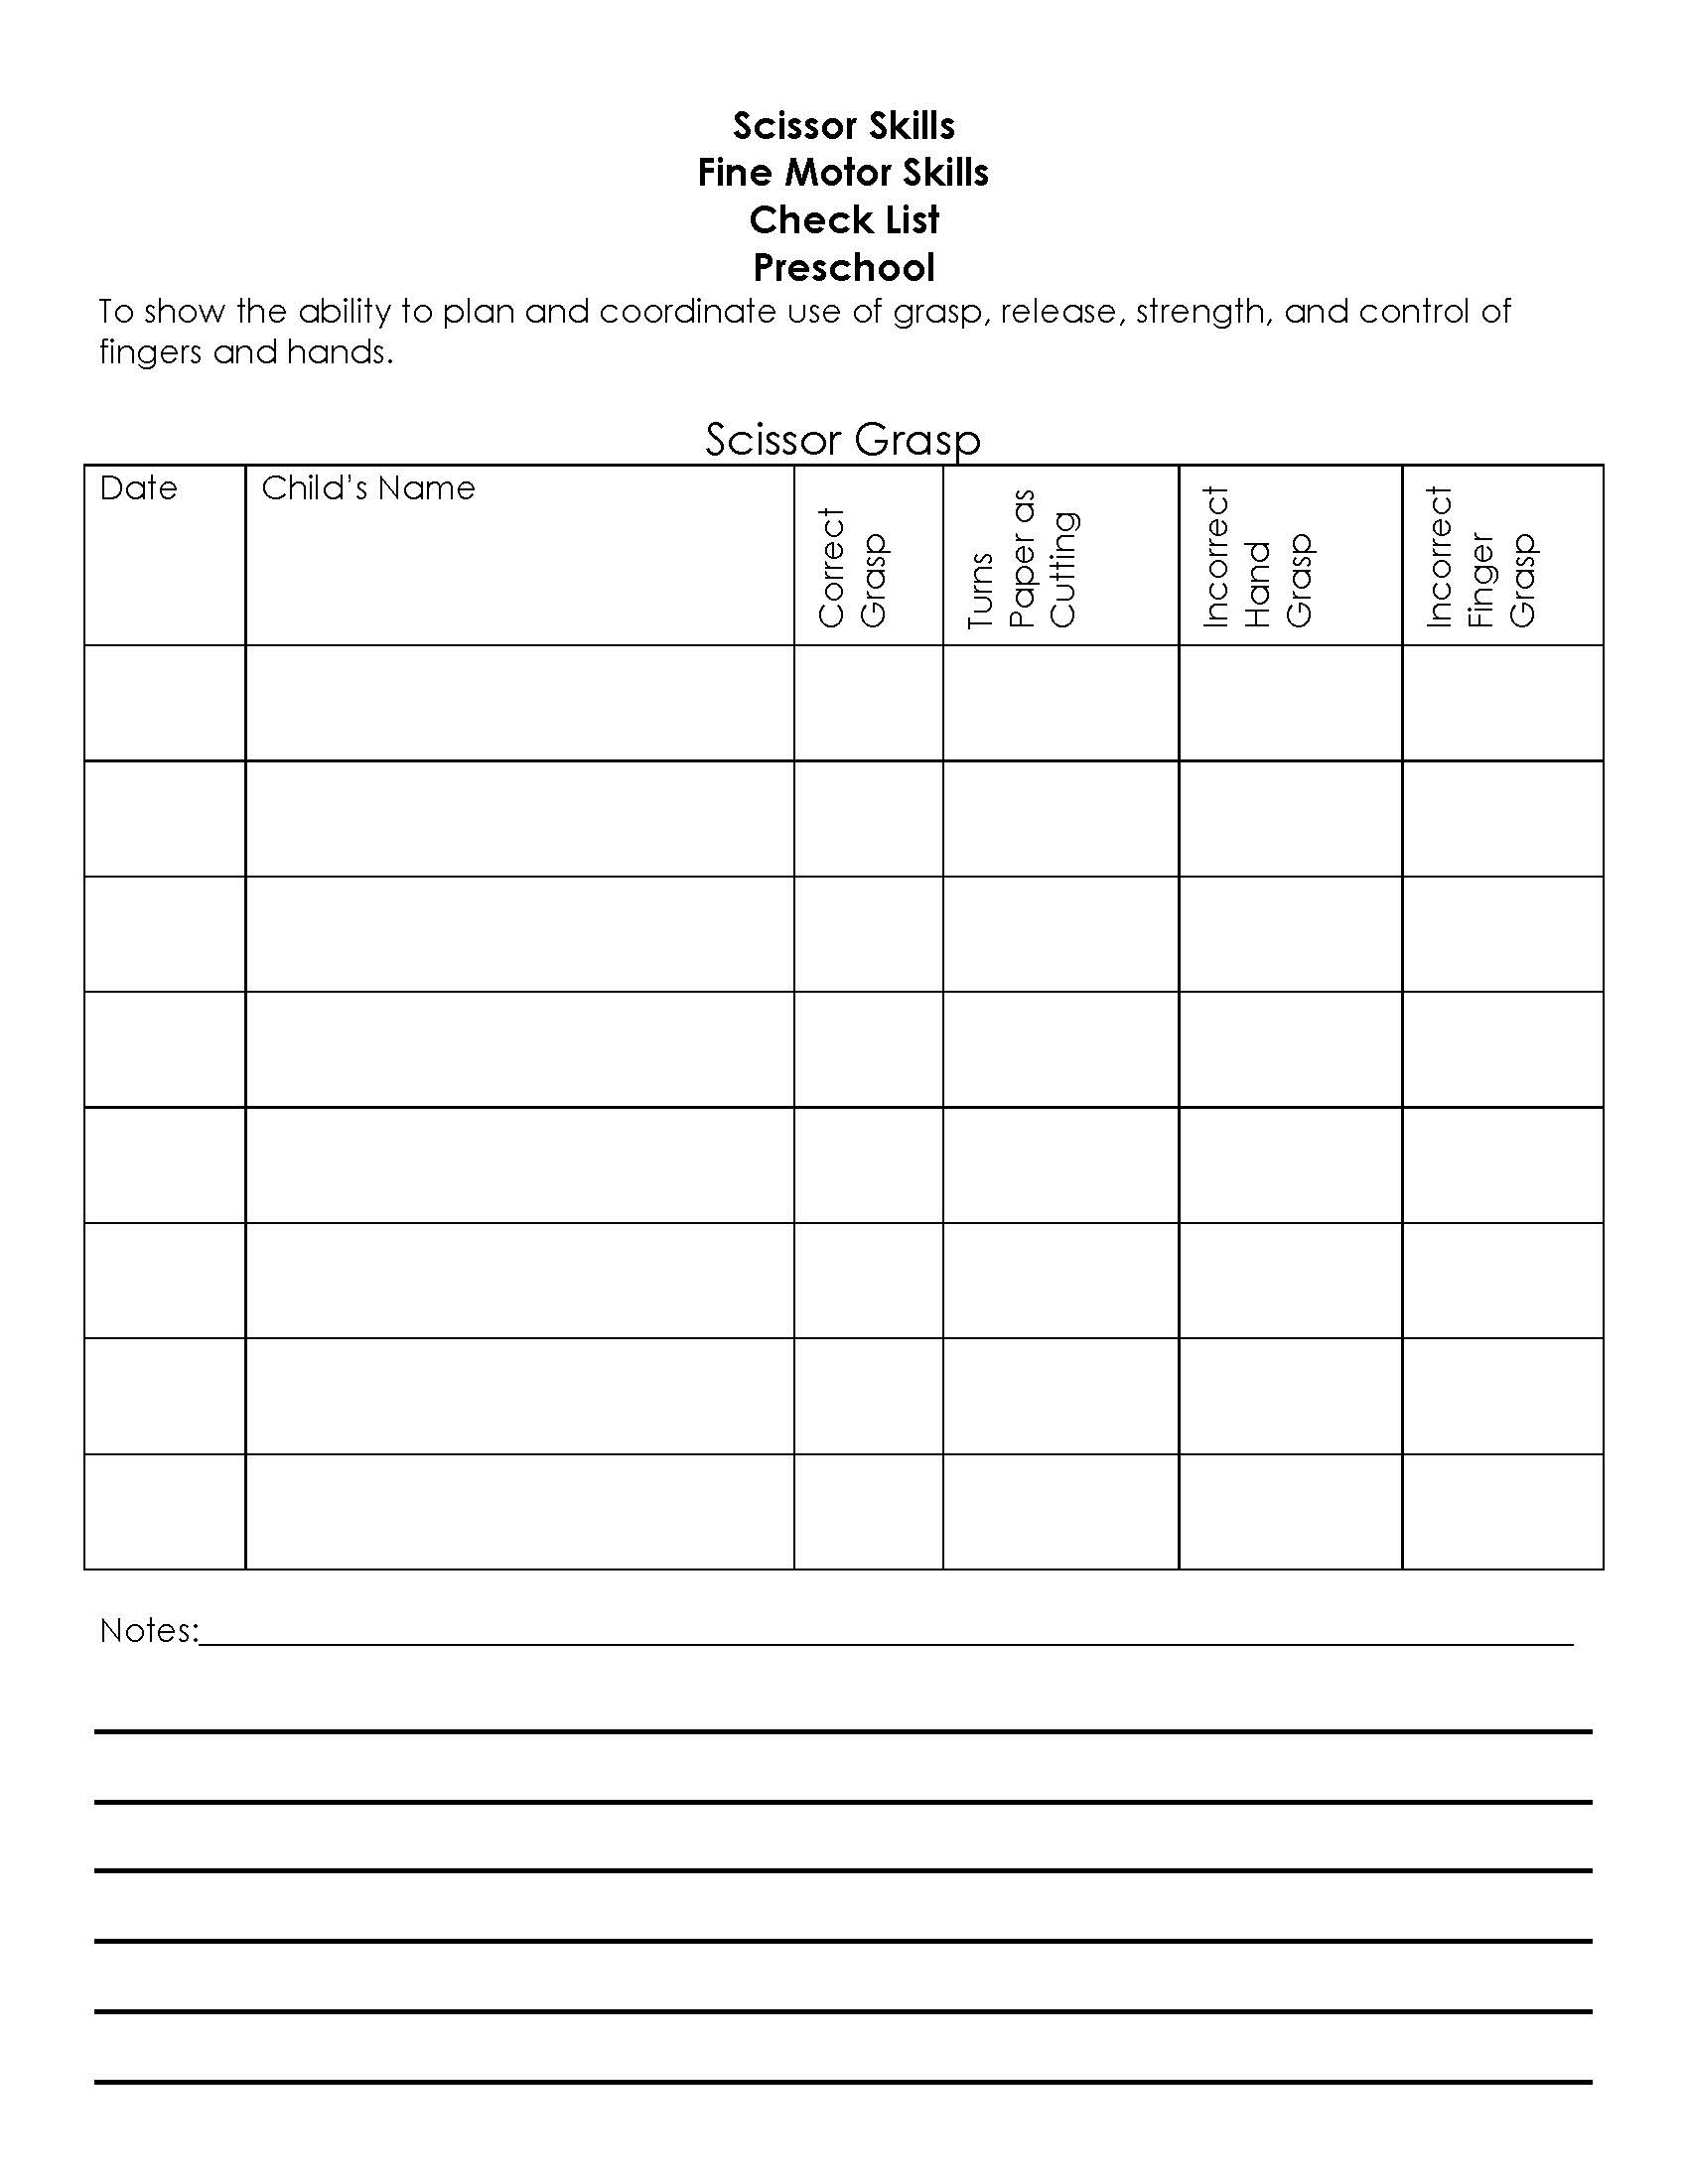 Checklist and Portfolio Assessment Tools